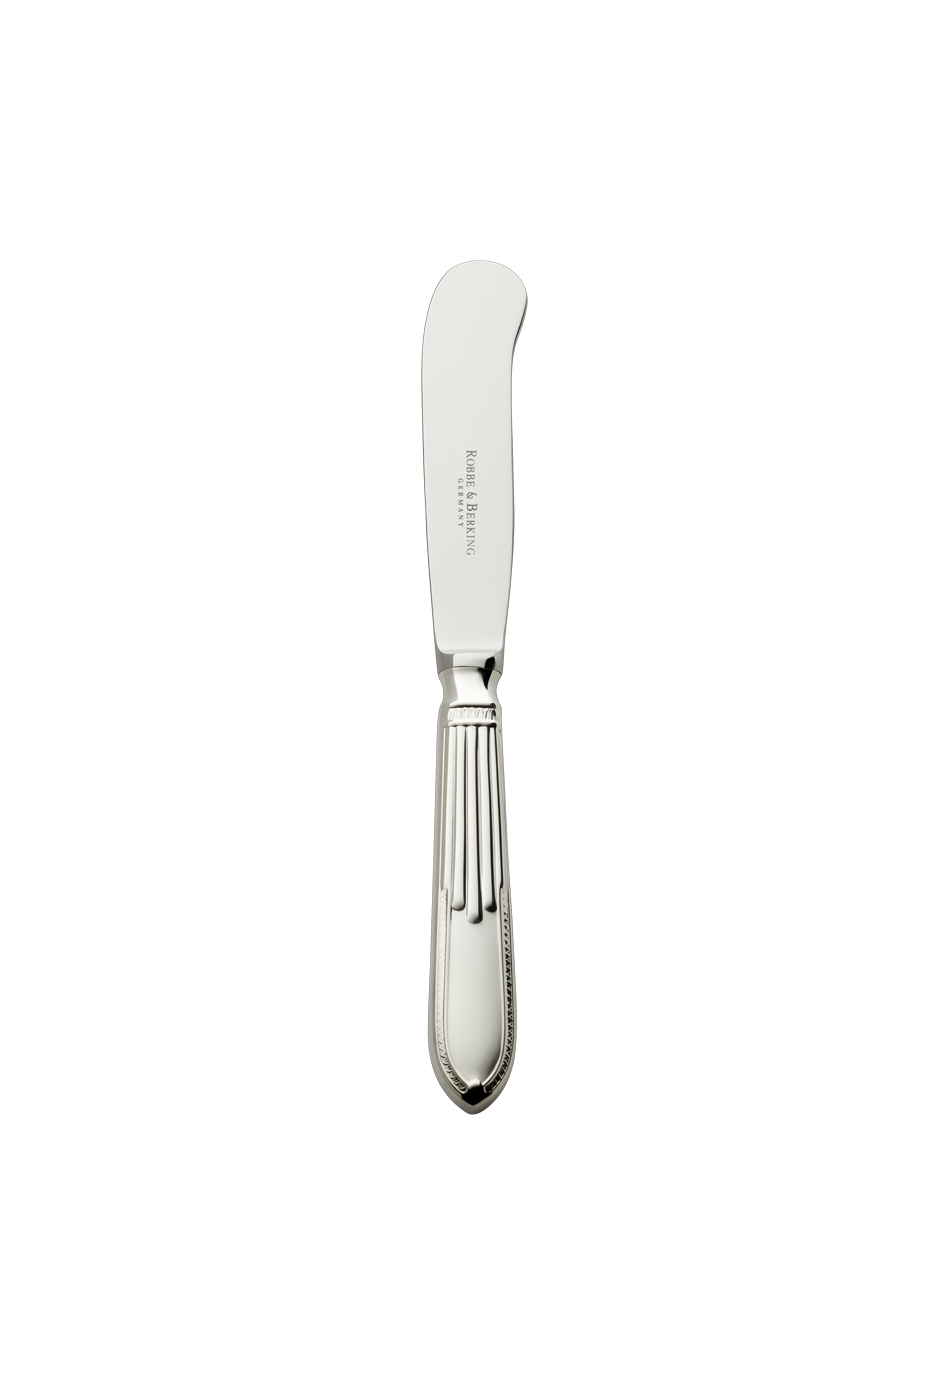 Belvedere Butter Knife (150g massive silverplated)